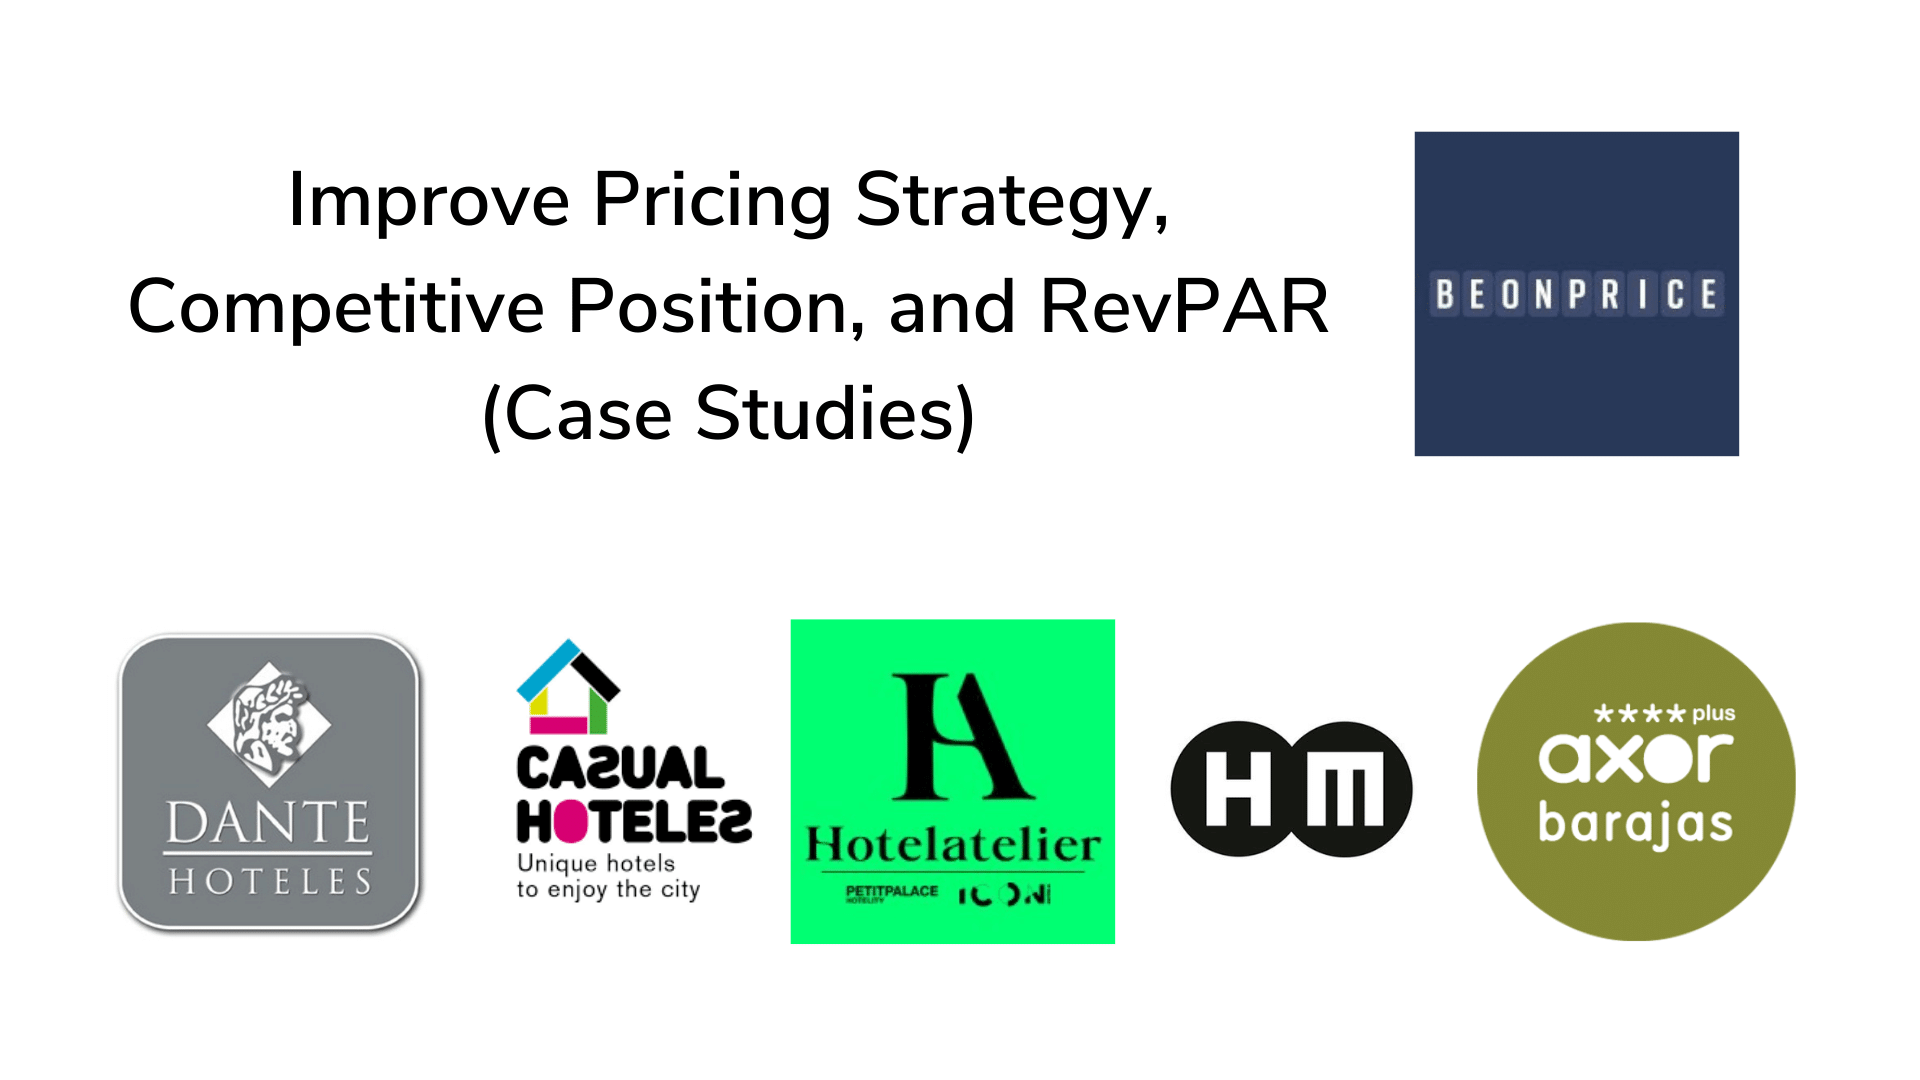 Improve Pricing Strategy, Competitive Position, an RevPAR case studies Beonprice article image